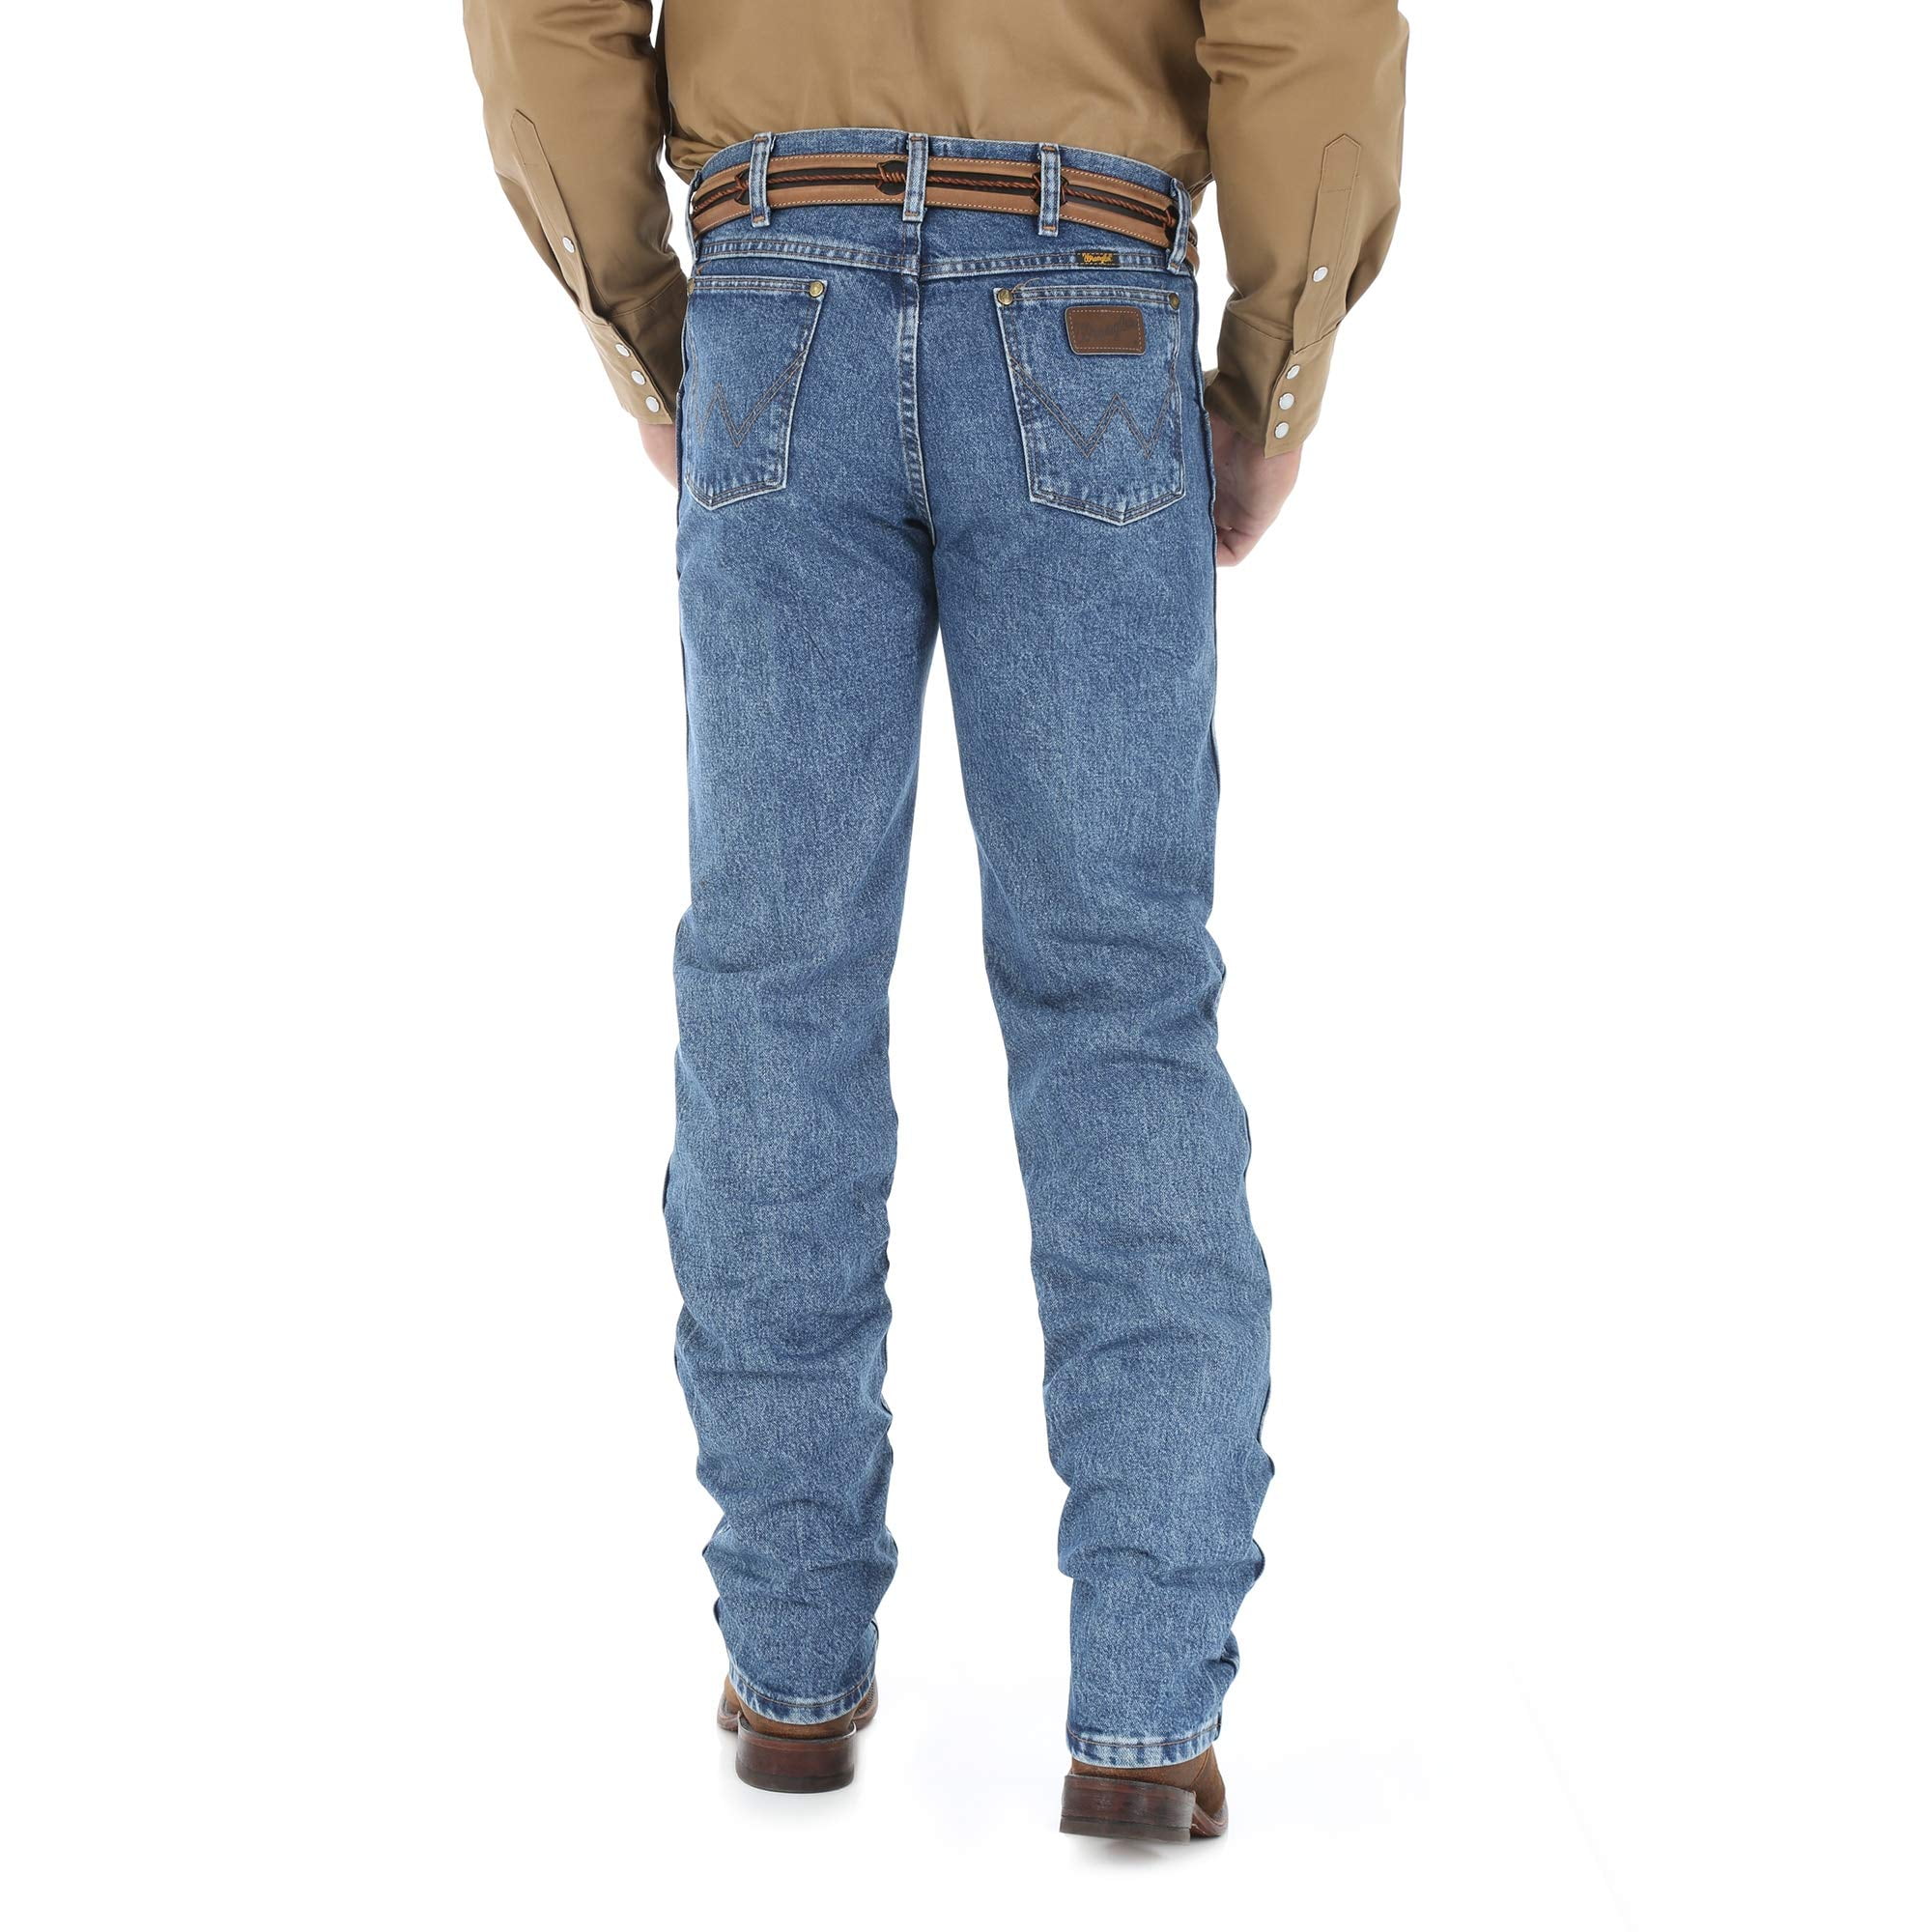 47MWZPW Wrangler New Cowboy Cut Jeans Prewash 